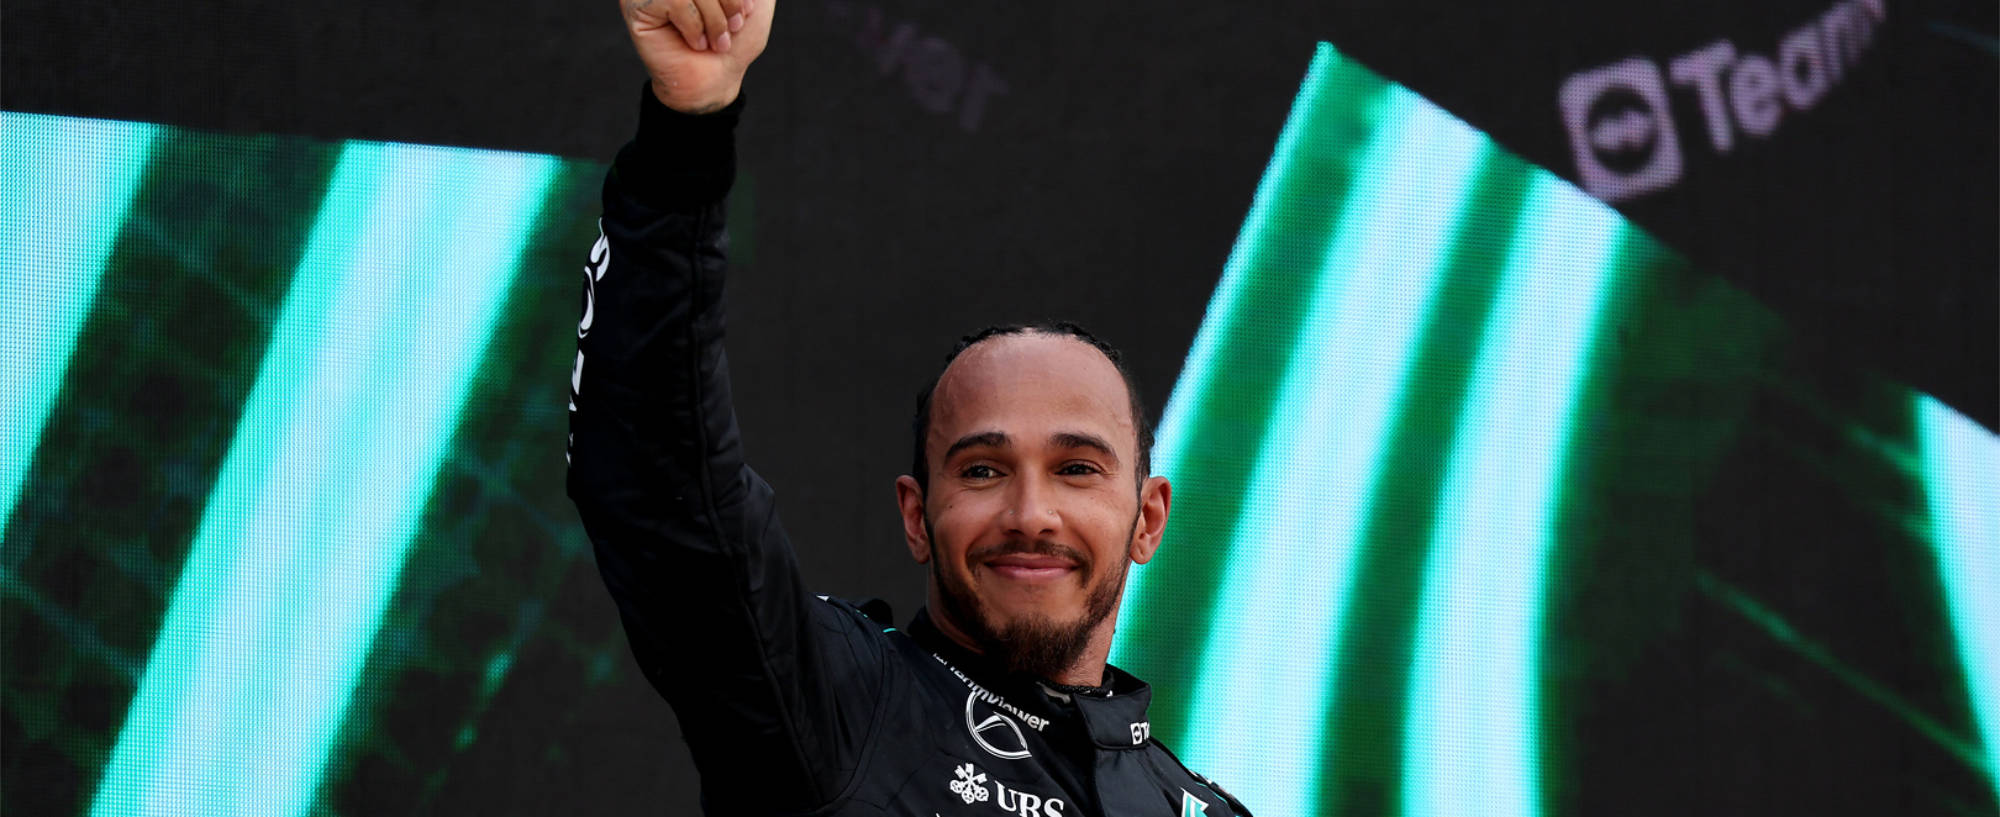 Lewis Hamilton on the podium in Spain